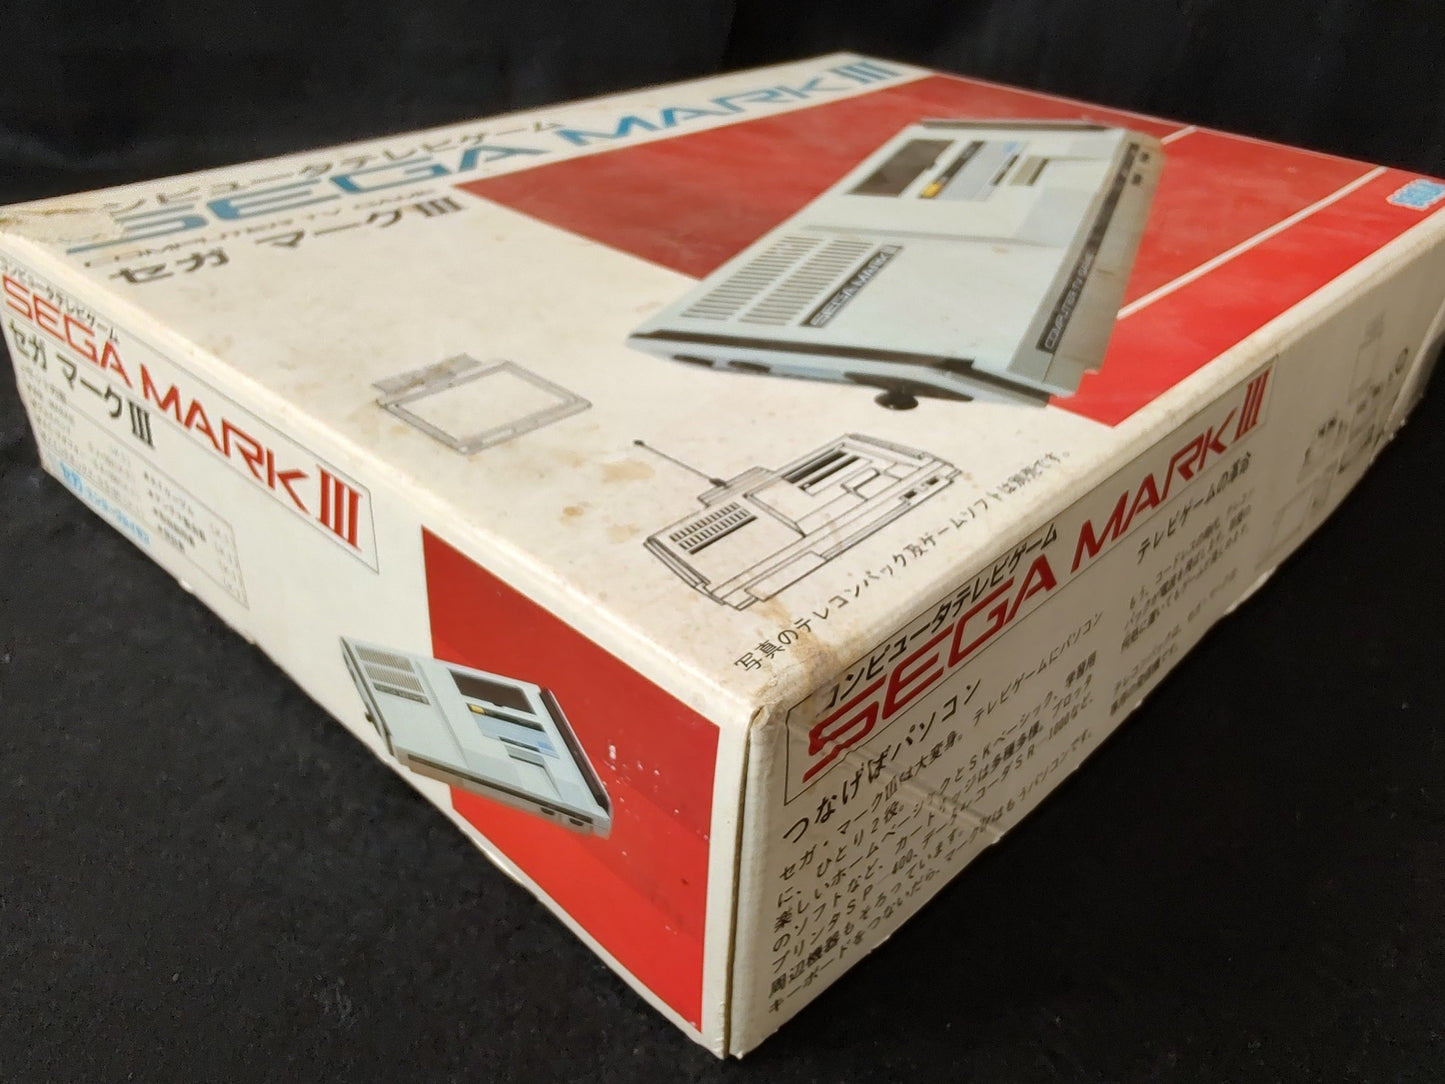 SEGA MARK 3 III CONSOLE (Sega Master System) ,w/Pads Papers set, Working-f0715-